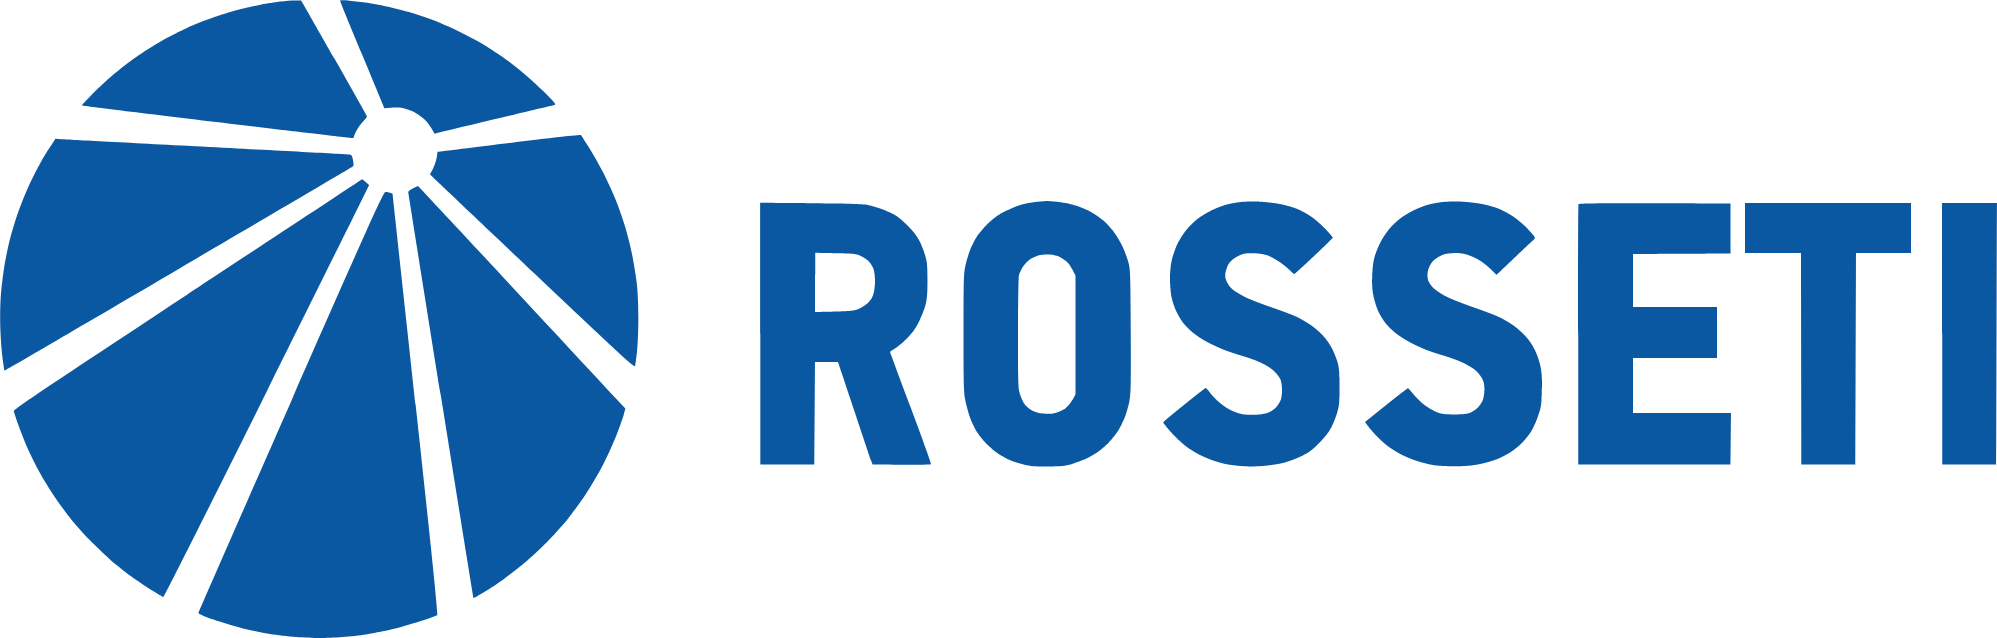 Rosseti logo large (transparent PNG)